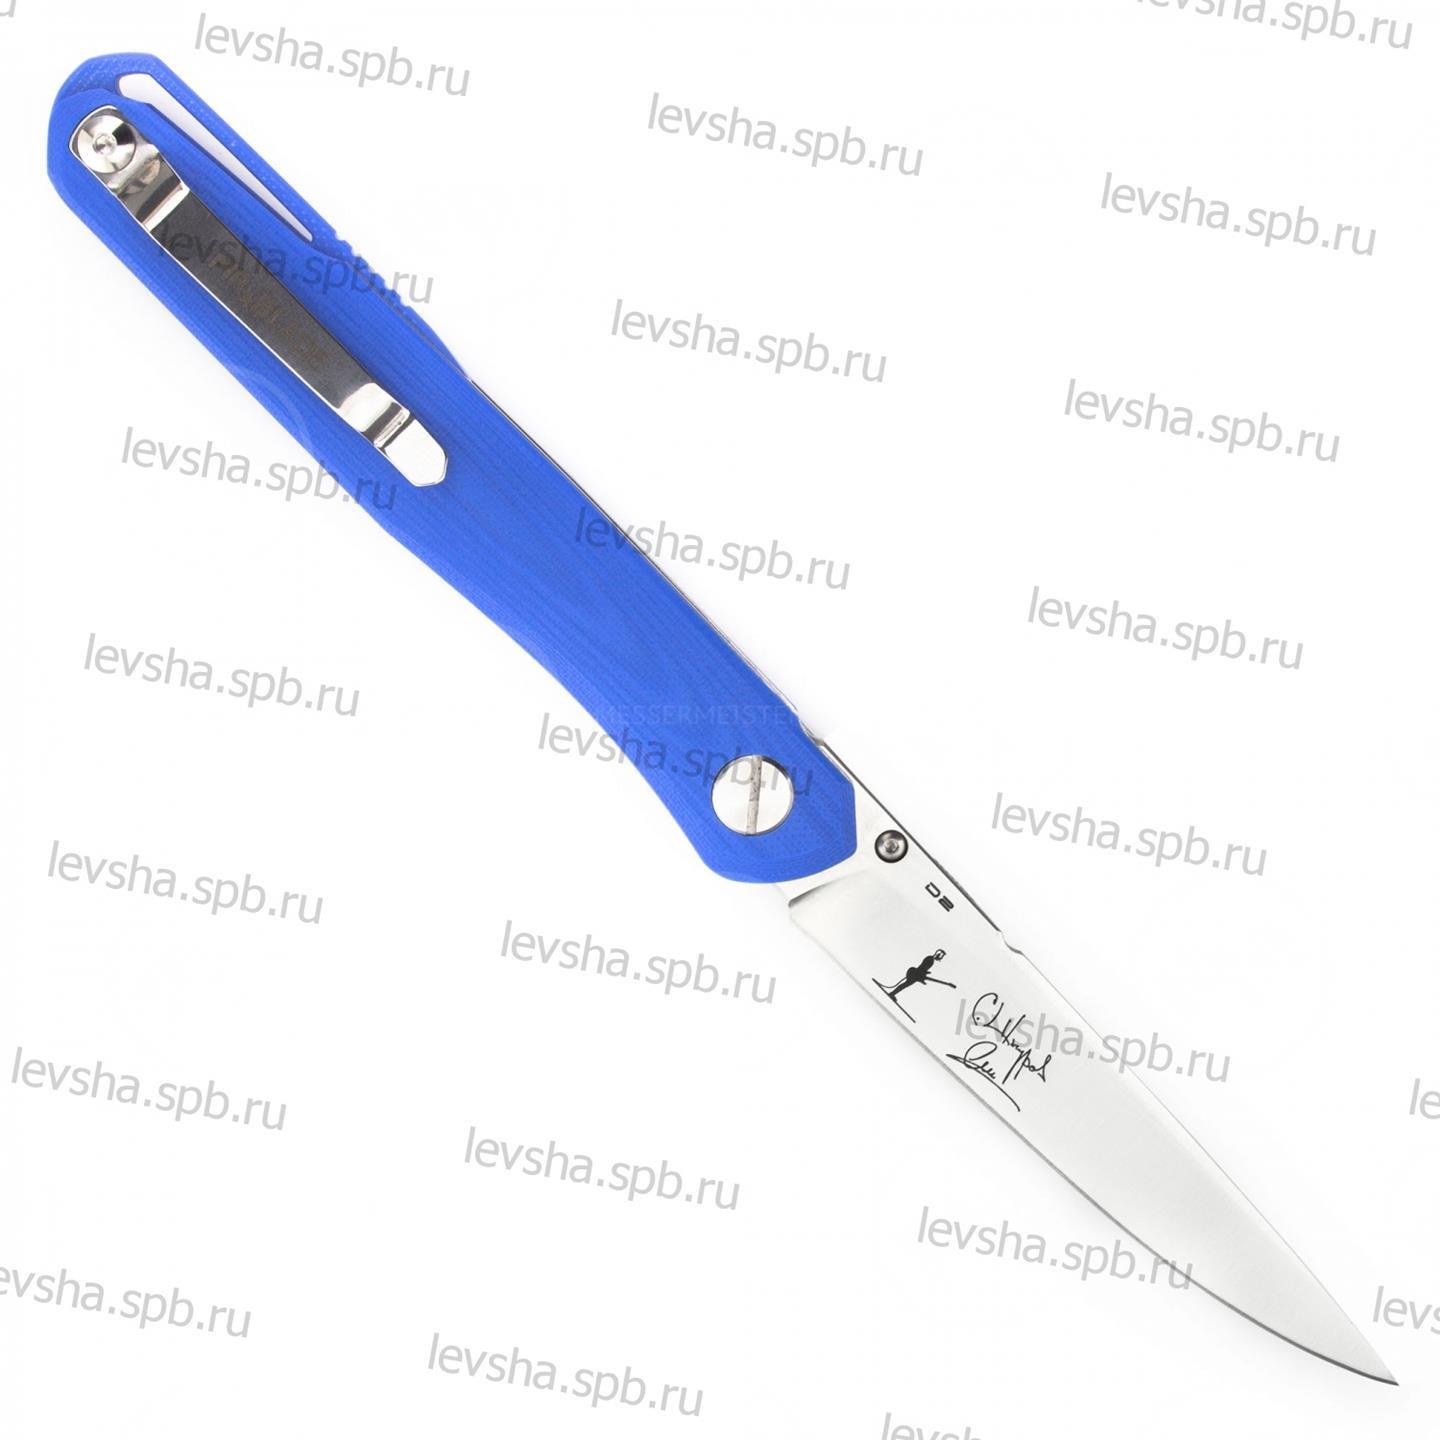 нож "astris" (blue handle) автограф фото